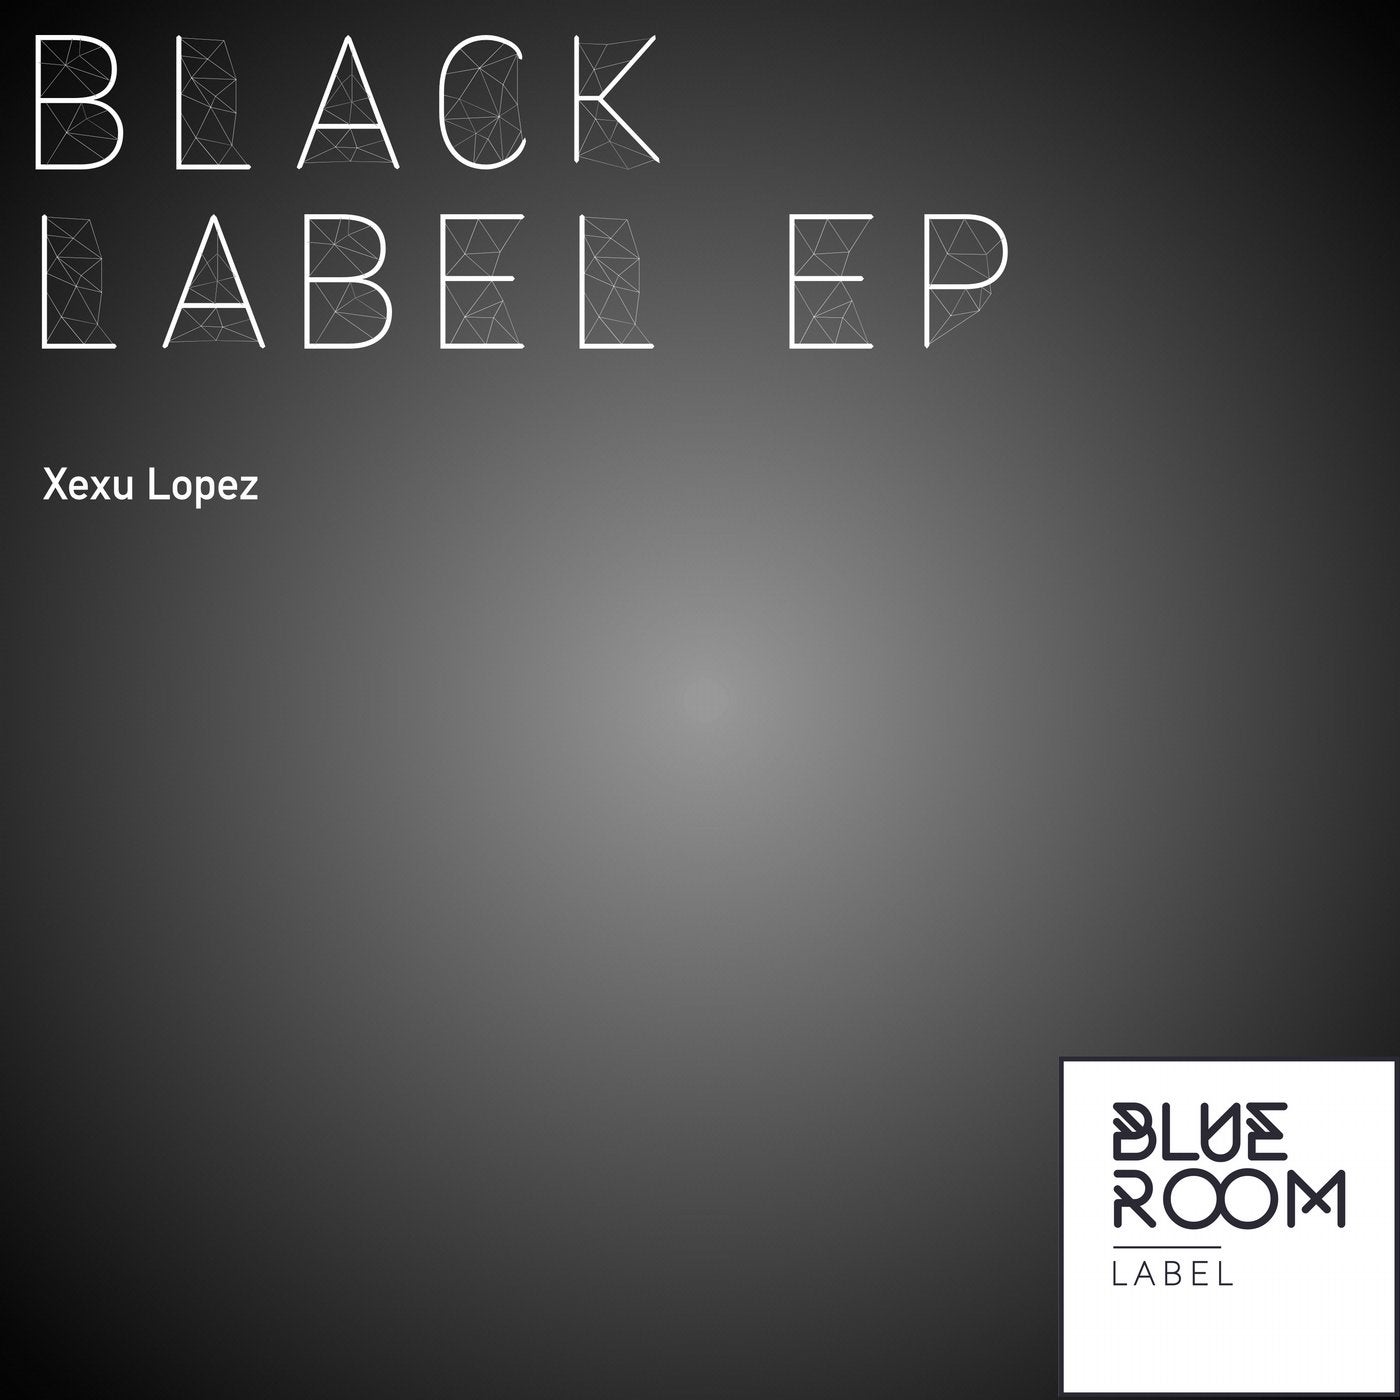 Black Label EP